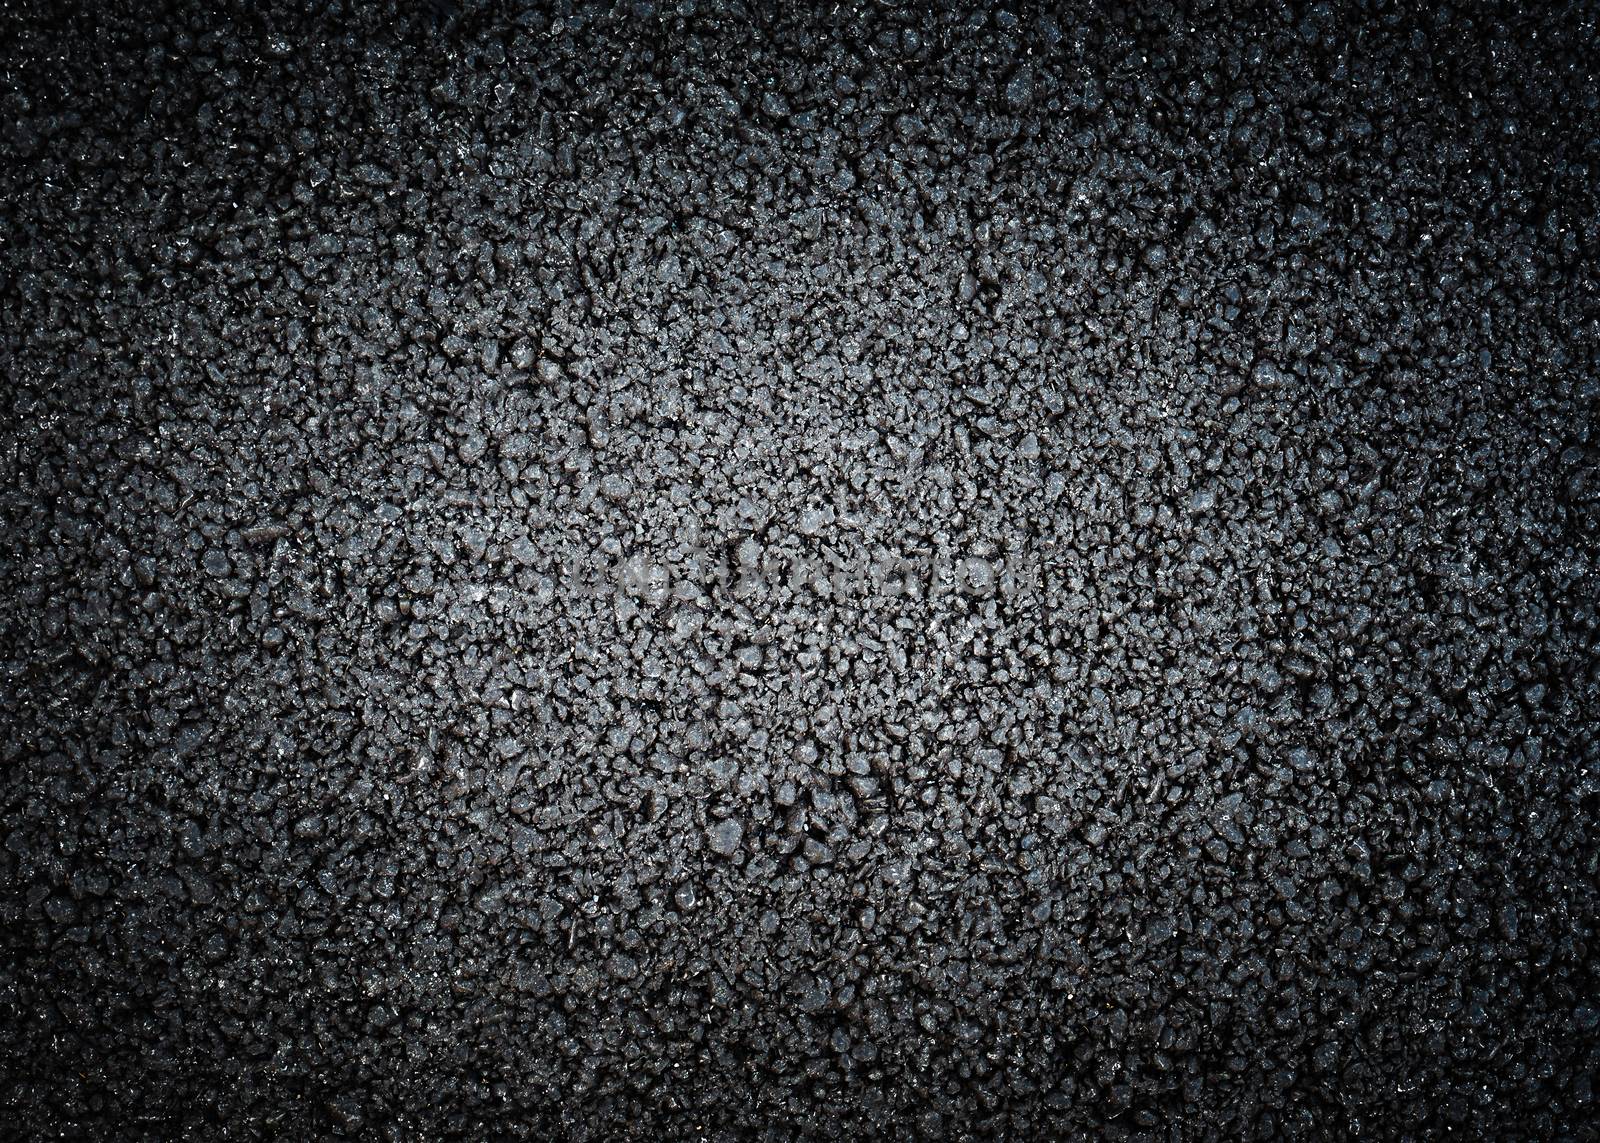 Black asphalt texture, dark background with strong vignette